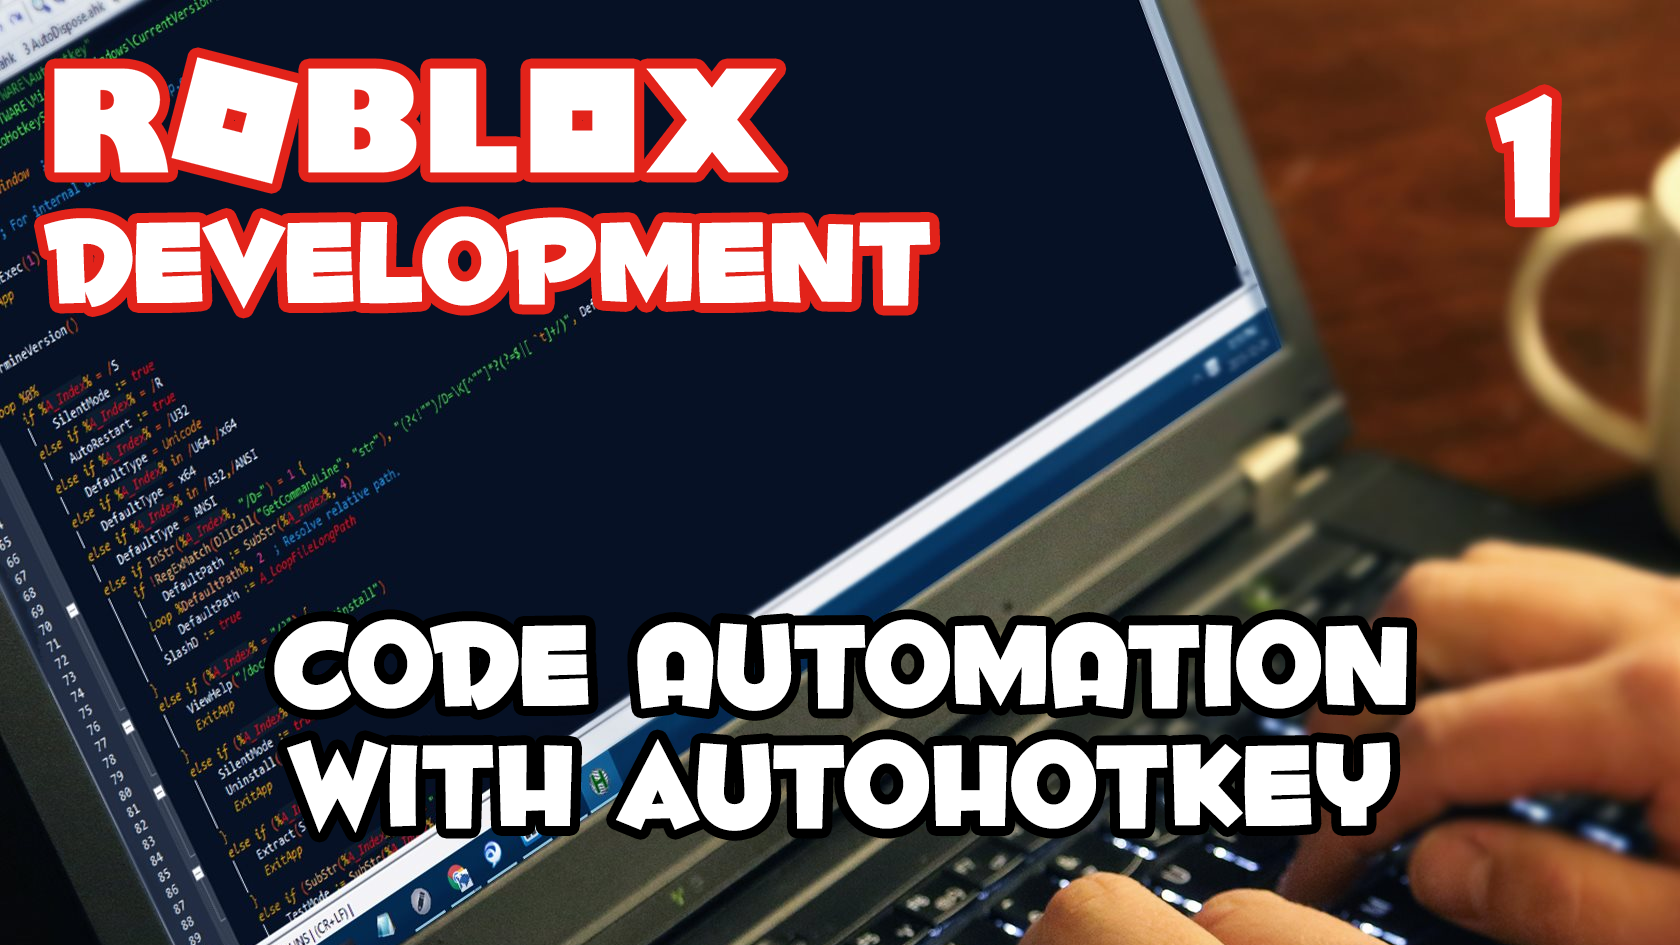 Roblox Code Automation With Lua Code Templates In Roblox Studio With Autohotkey Roblox Development 01 Cria Jogo - best roblox scripts ahk